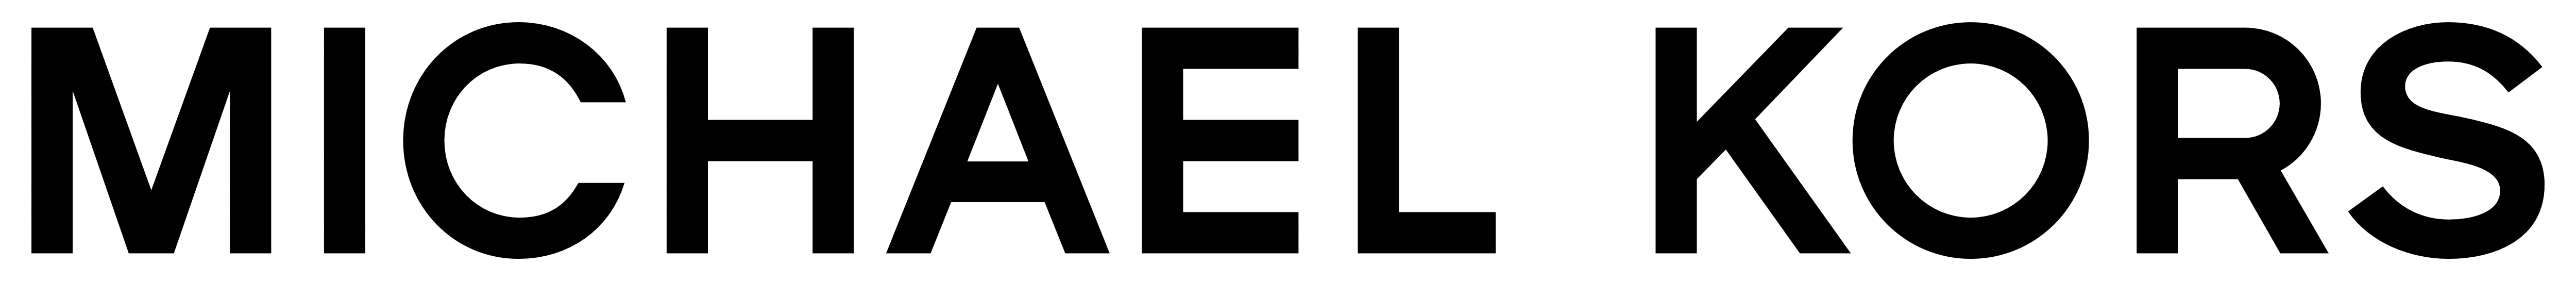 Michael Kors logo wordmark logotype